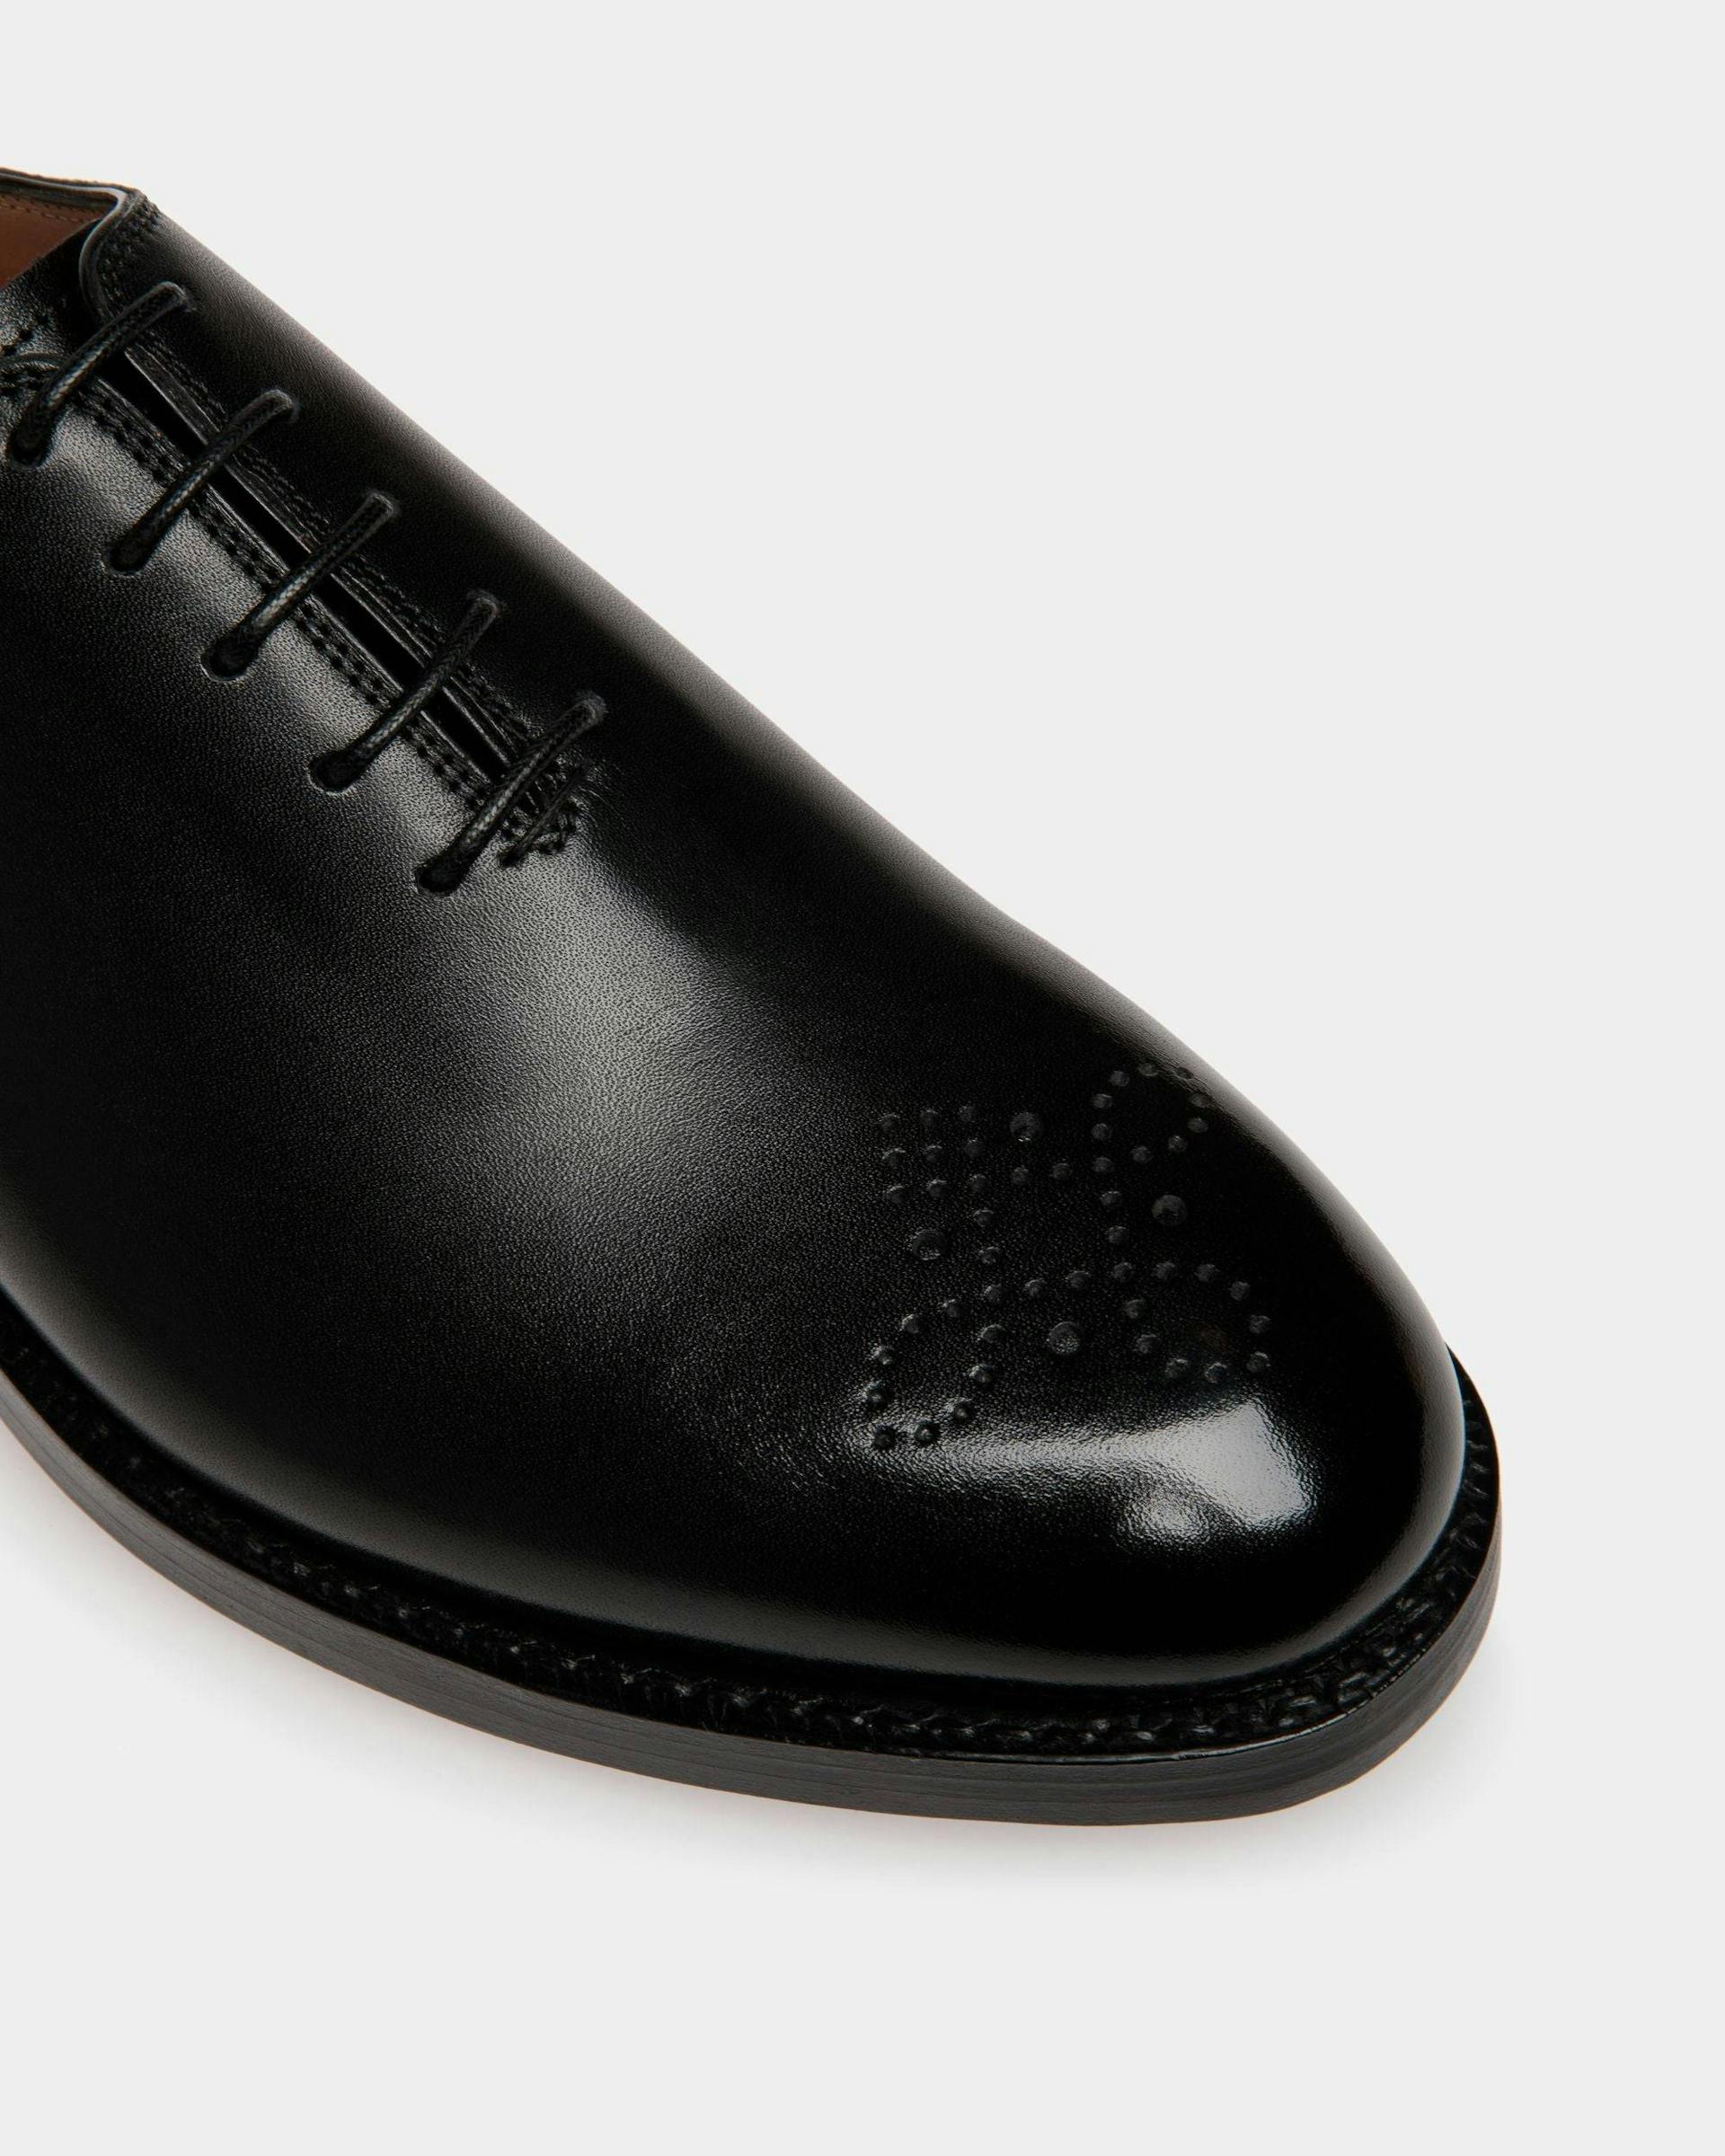 Men's Schoenen Oxford In Black Leather | Bally | Still Life Detail